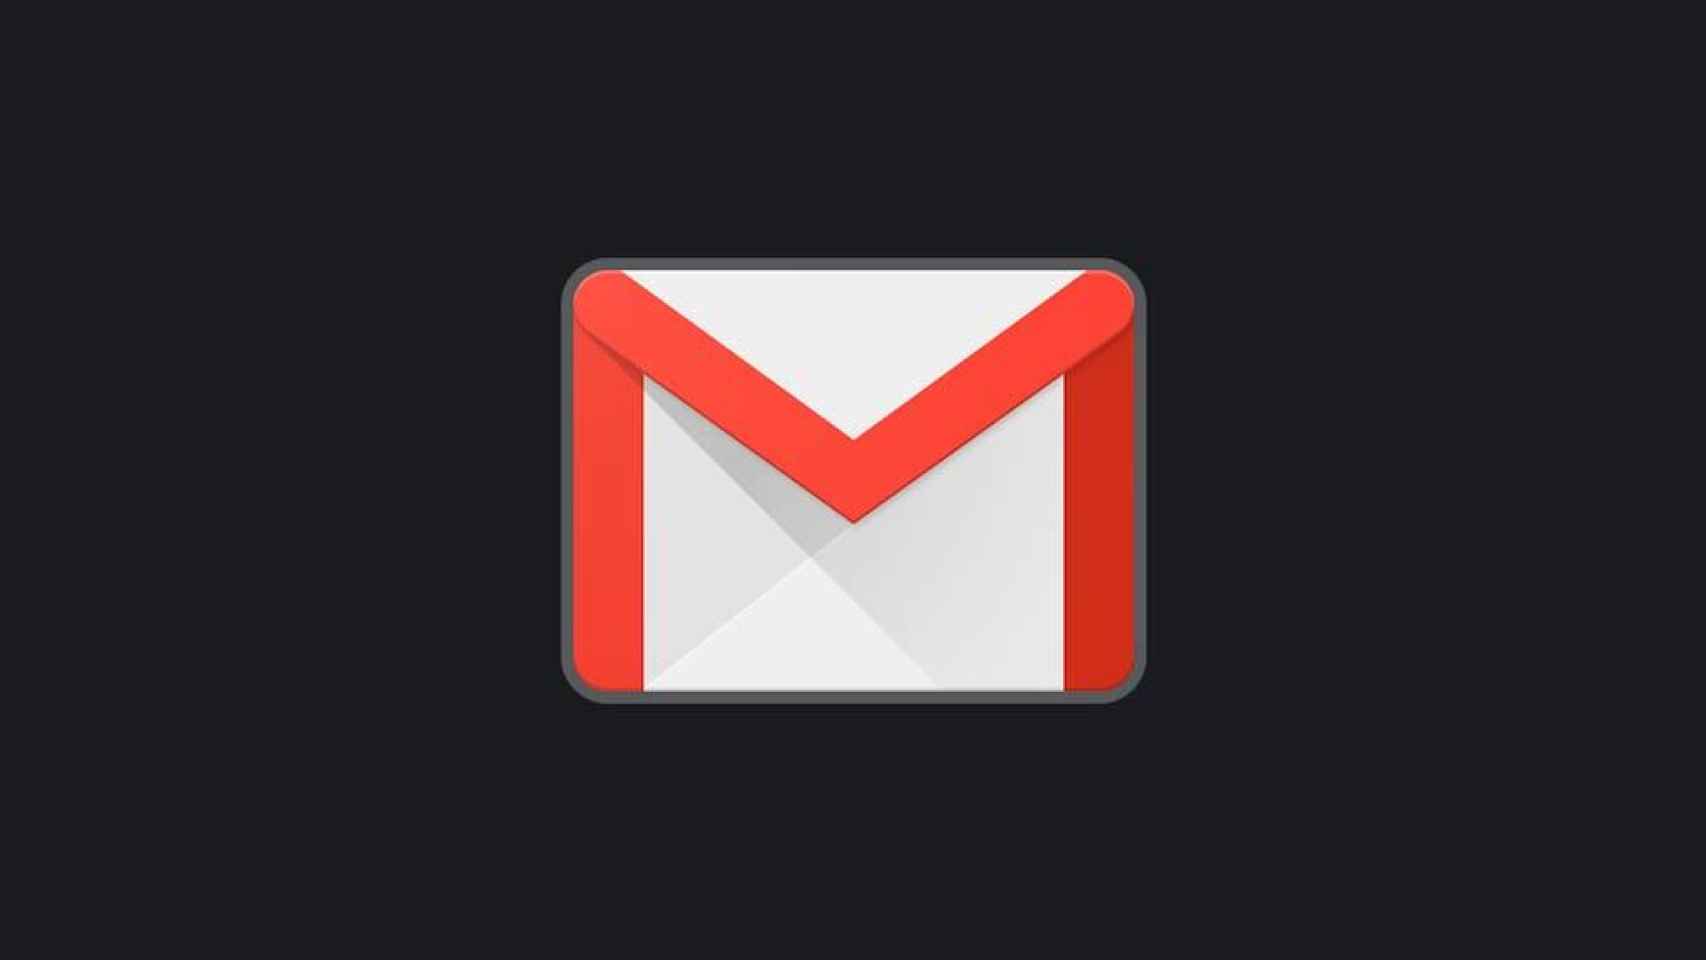 Gmail.